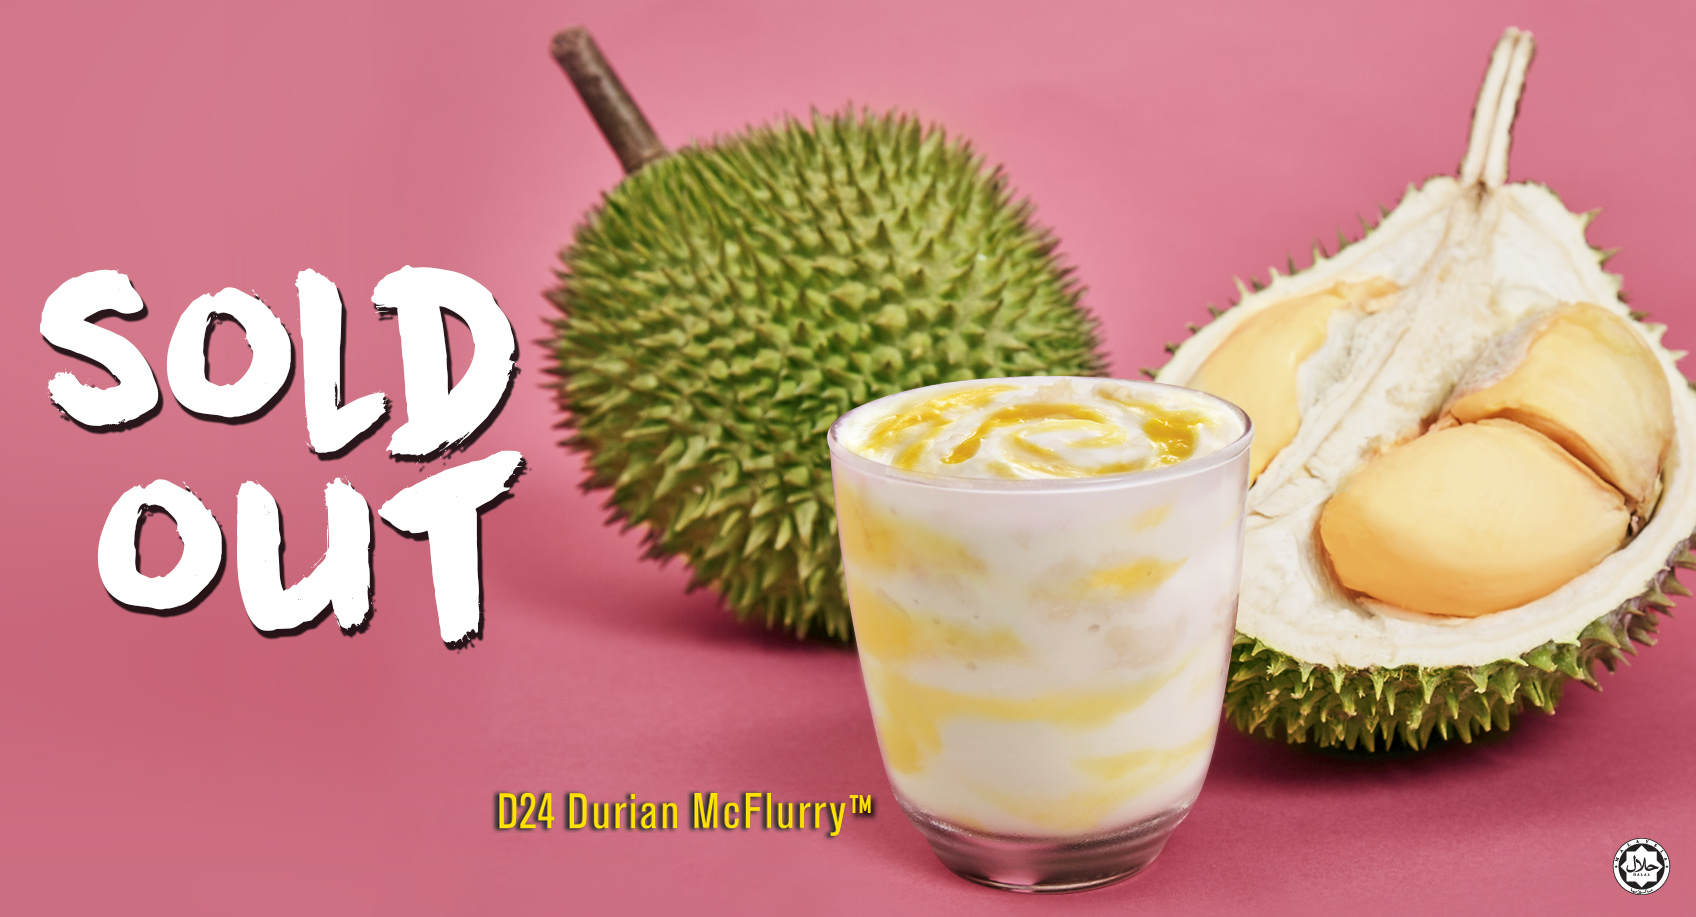 Mcflurry durian